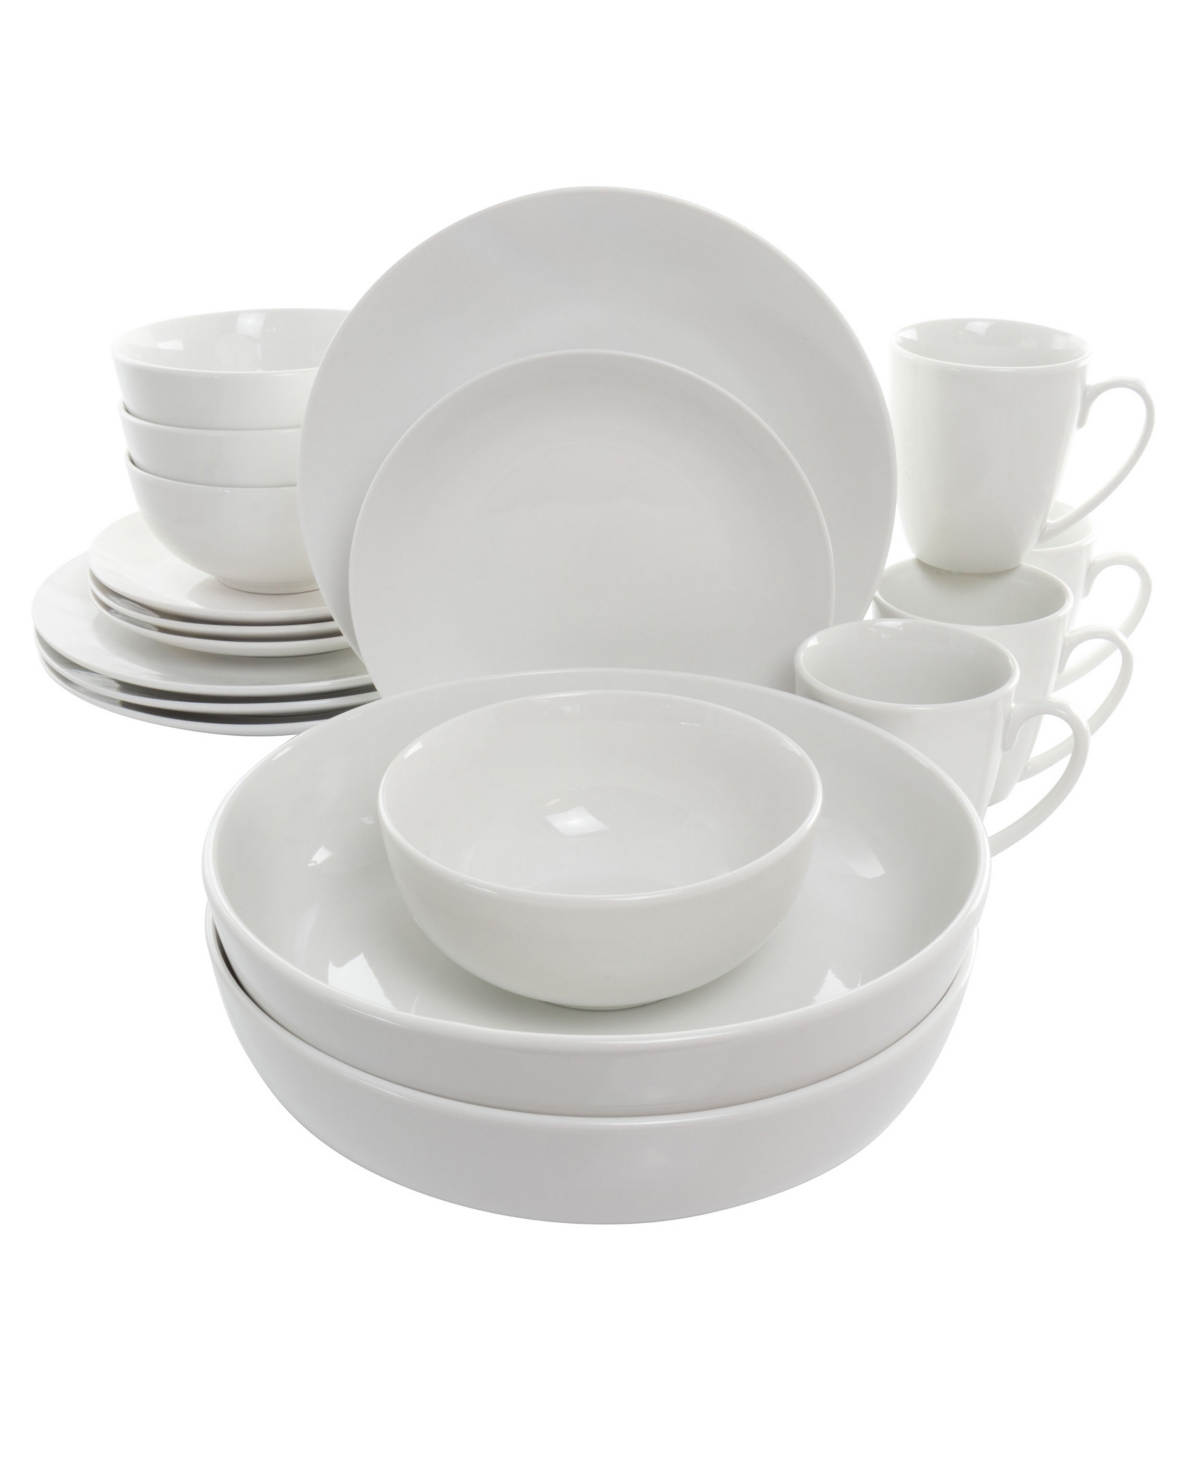 Josefa 18 Piece Porcelain Dinnerware Set with Large Serving Bowls - White